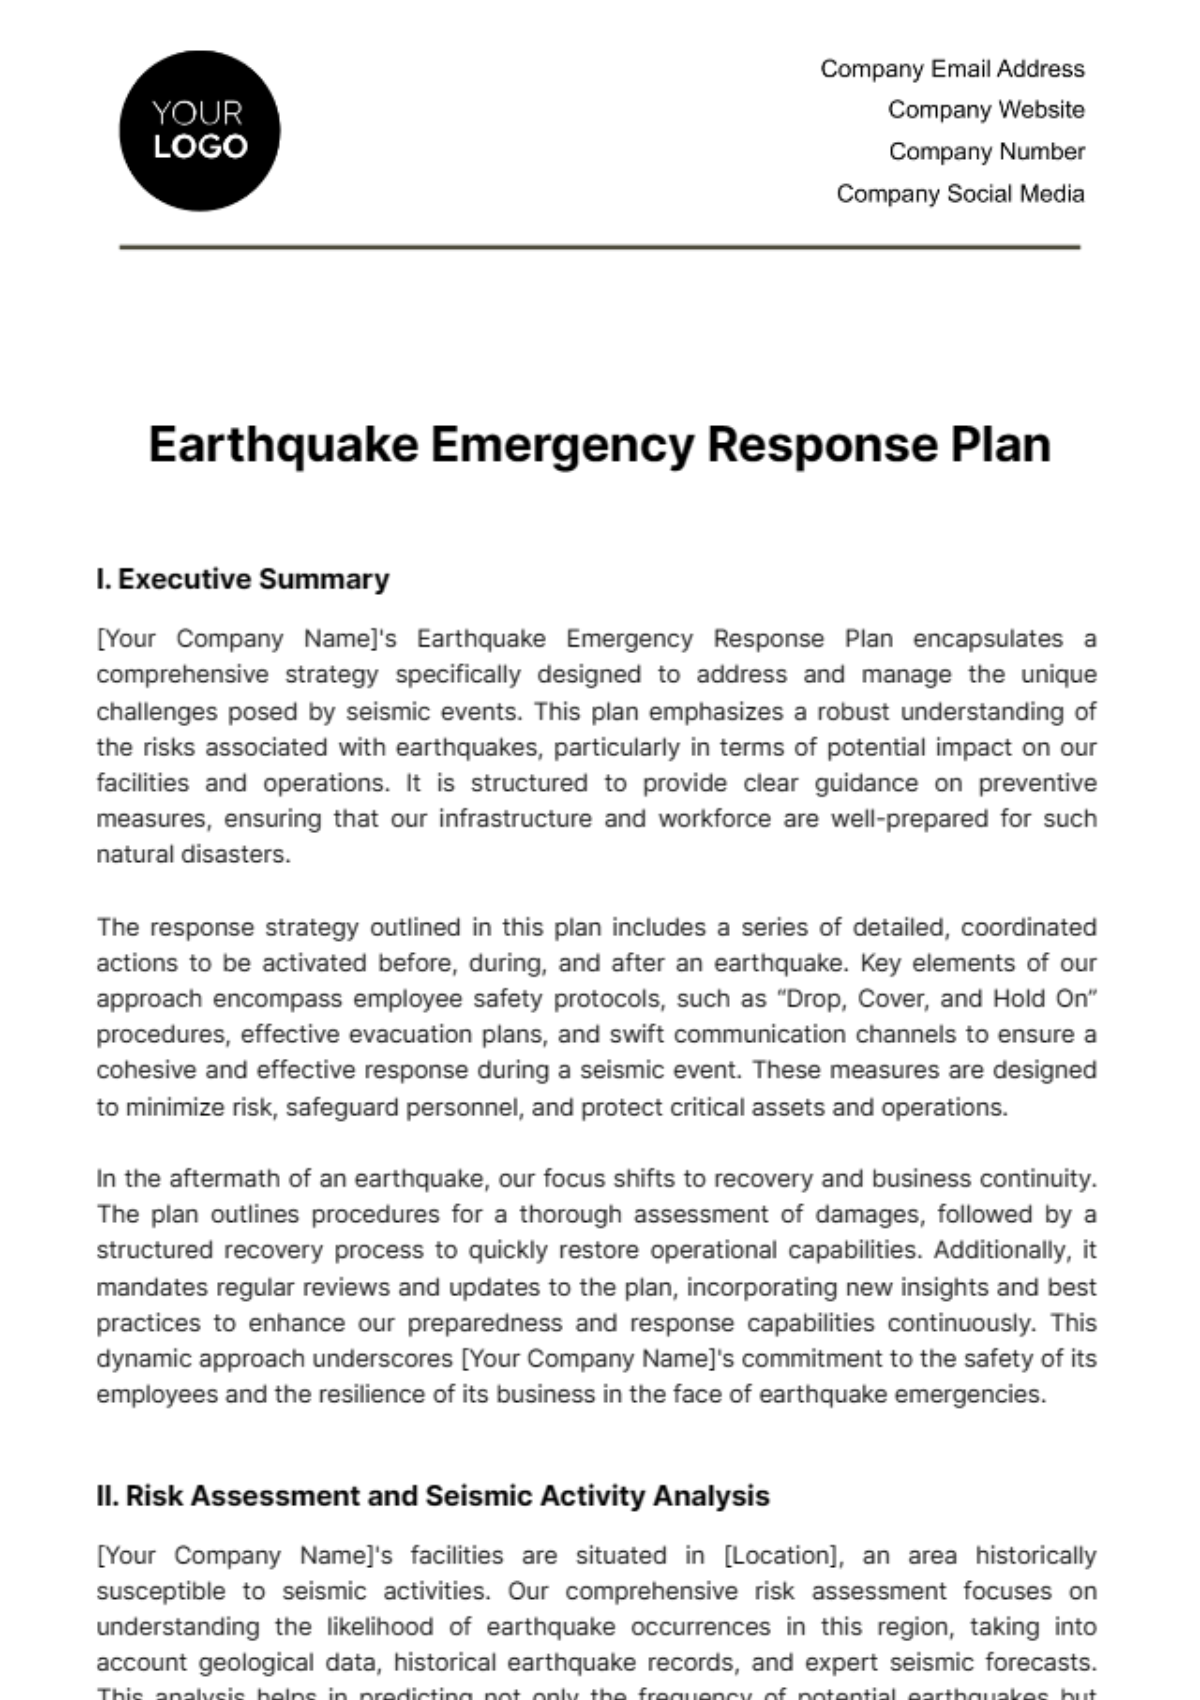 Earthquake Emergency Response Plan Template